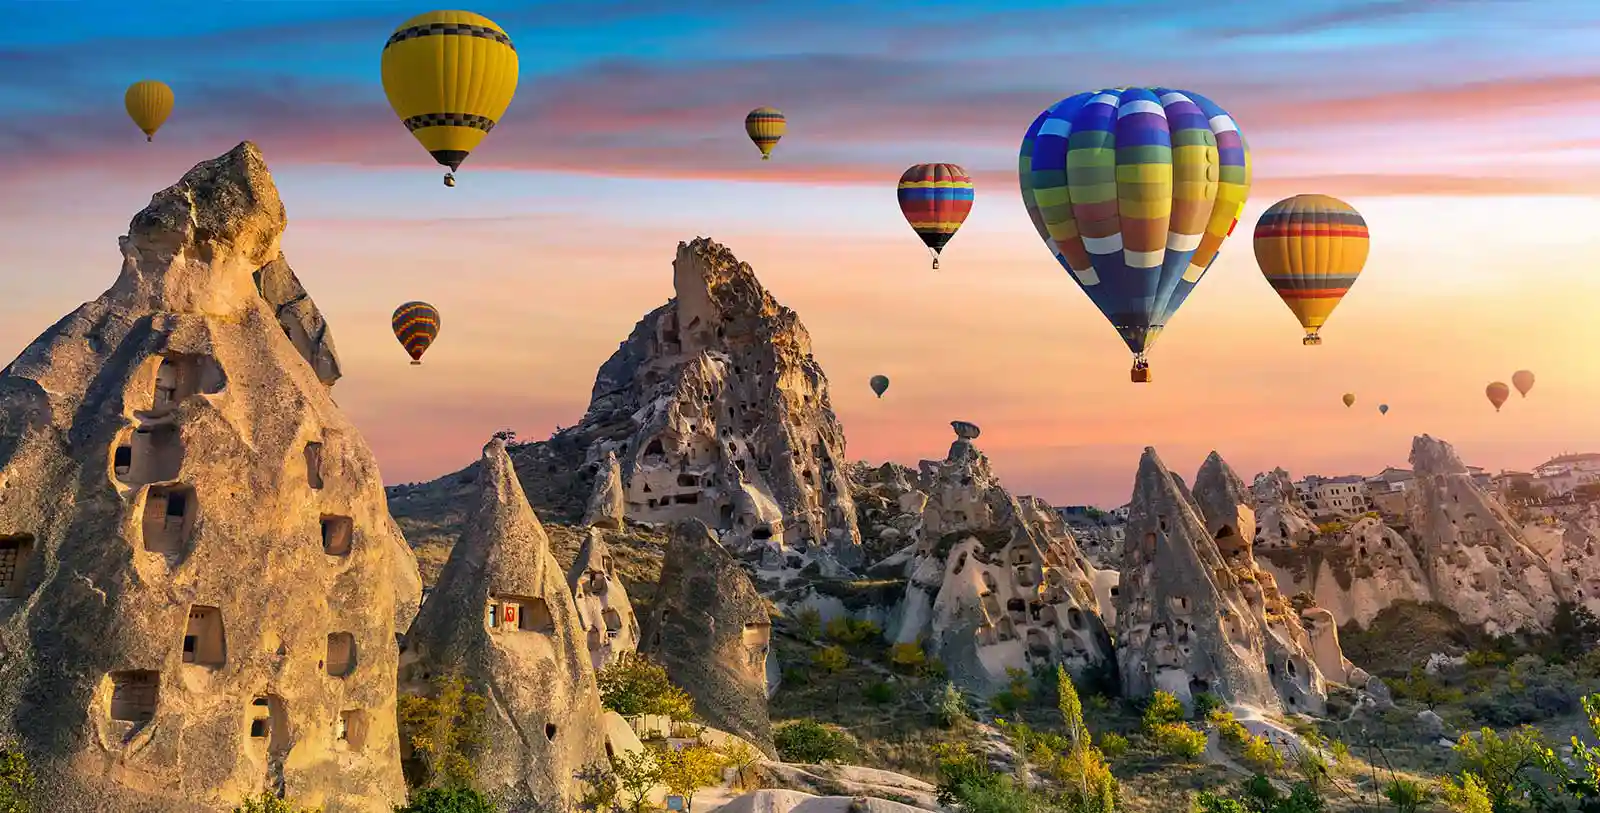 Baloons in Cappadocia, a heritage site in Turkey